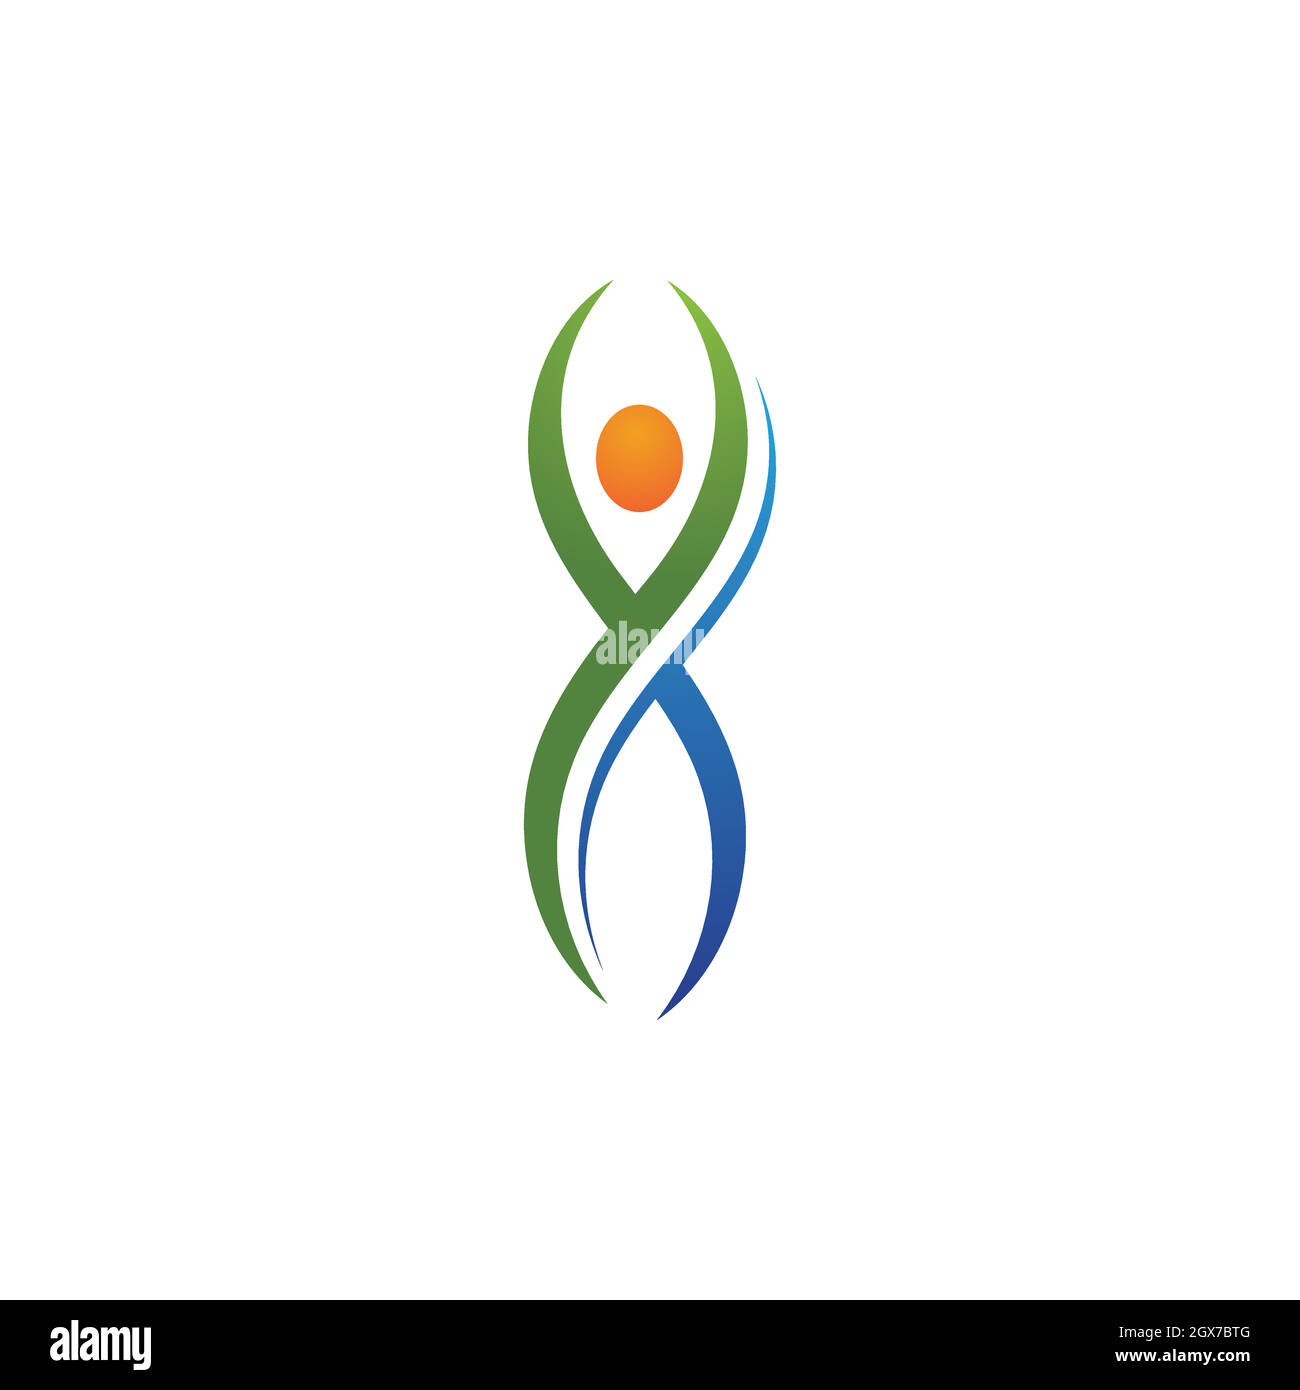 Health people life logo vector image Stock Vector